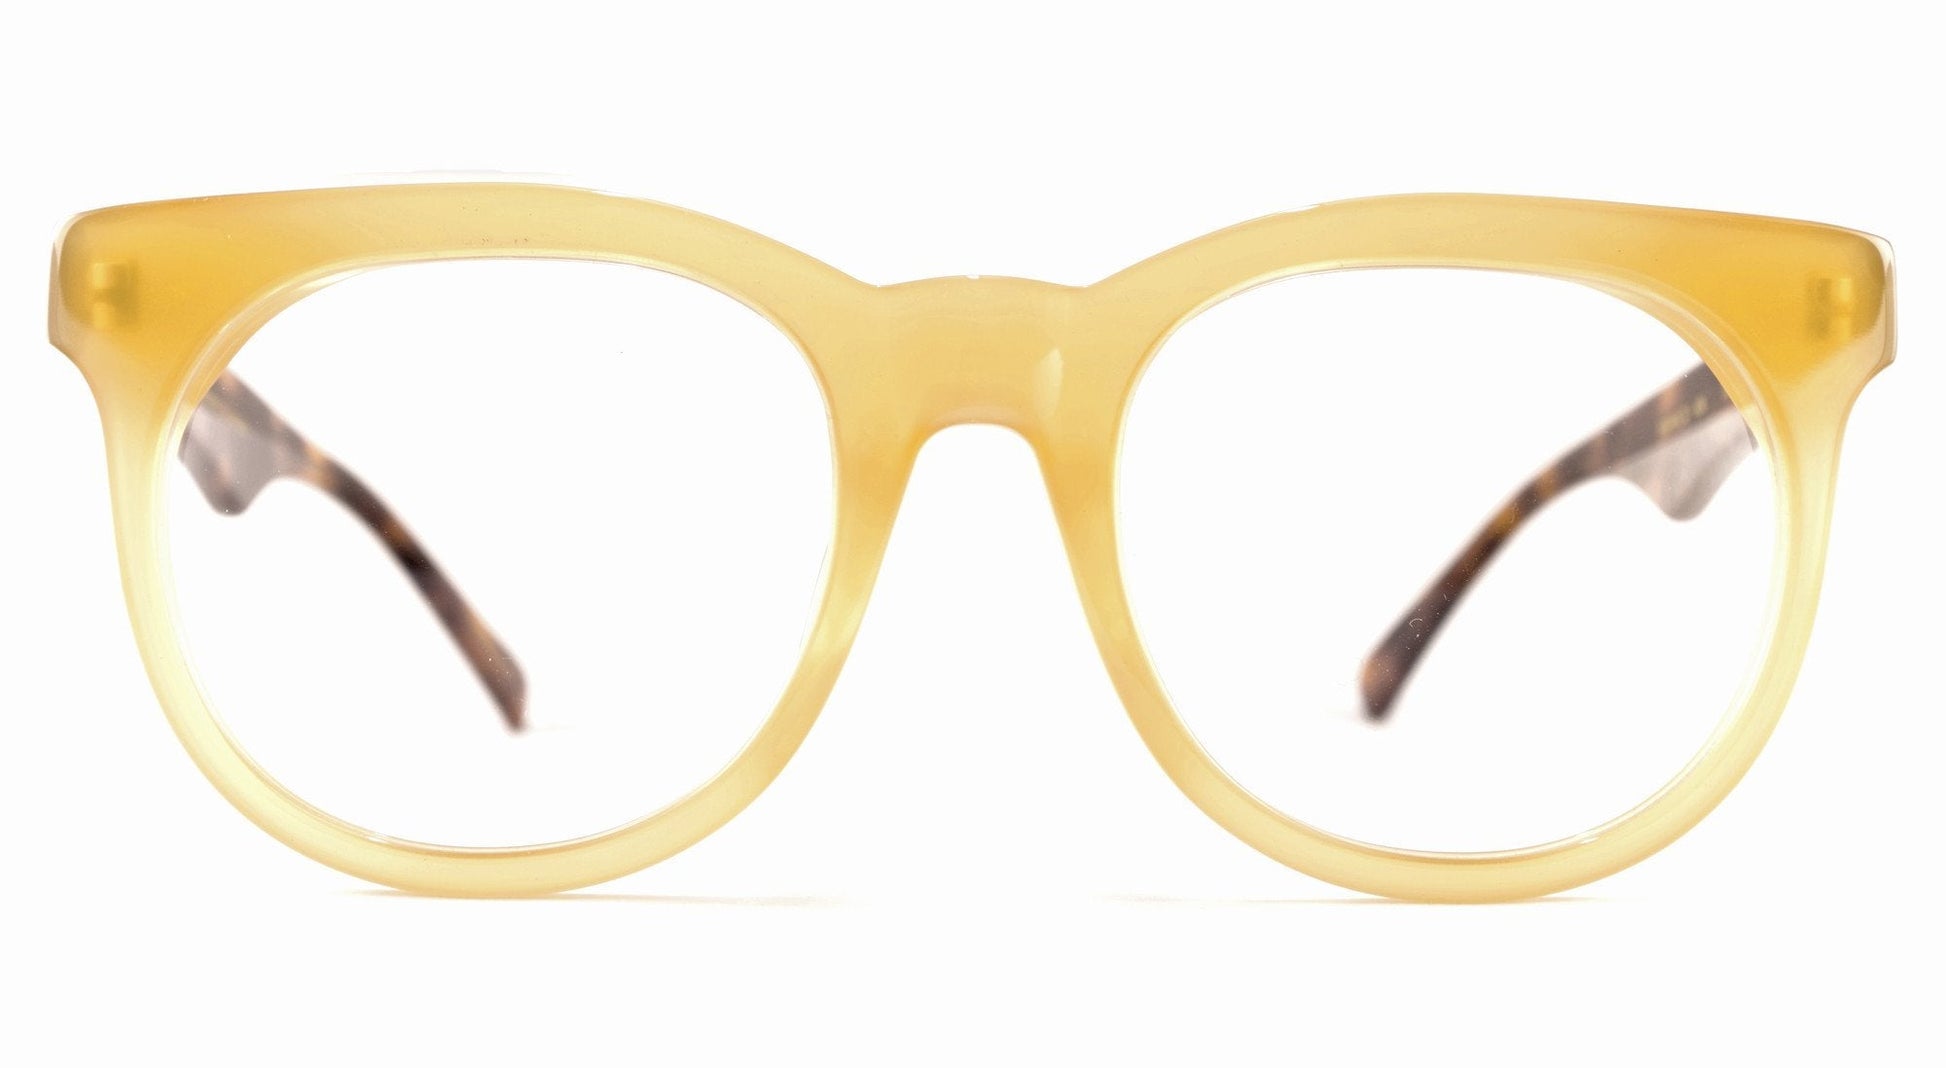 LDNR Berwick 004 Glasses (Amber)